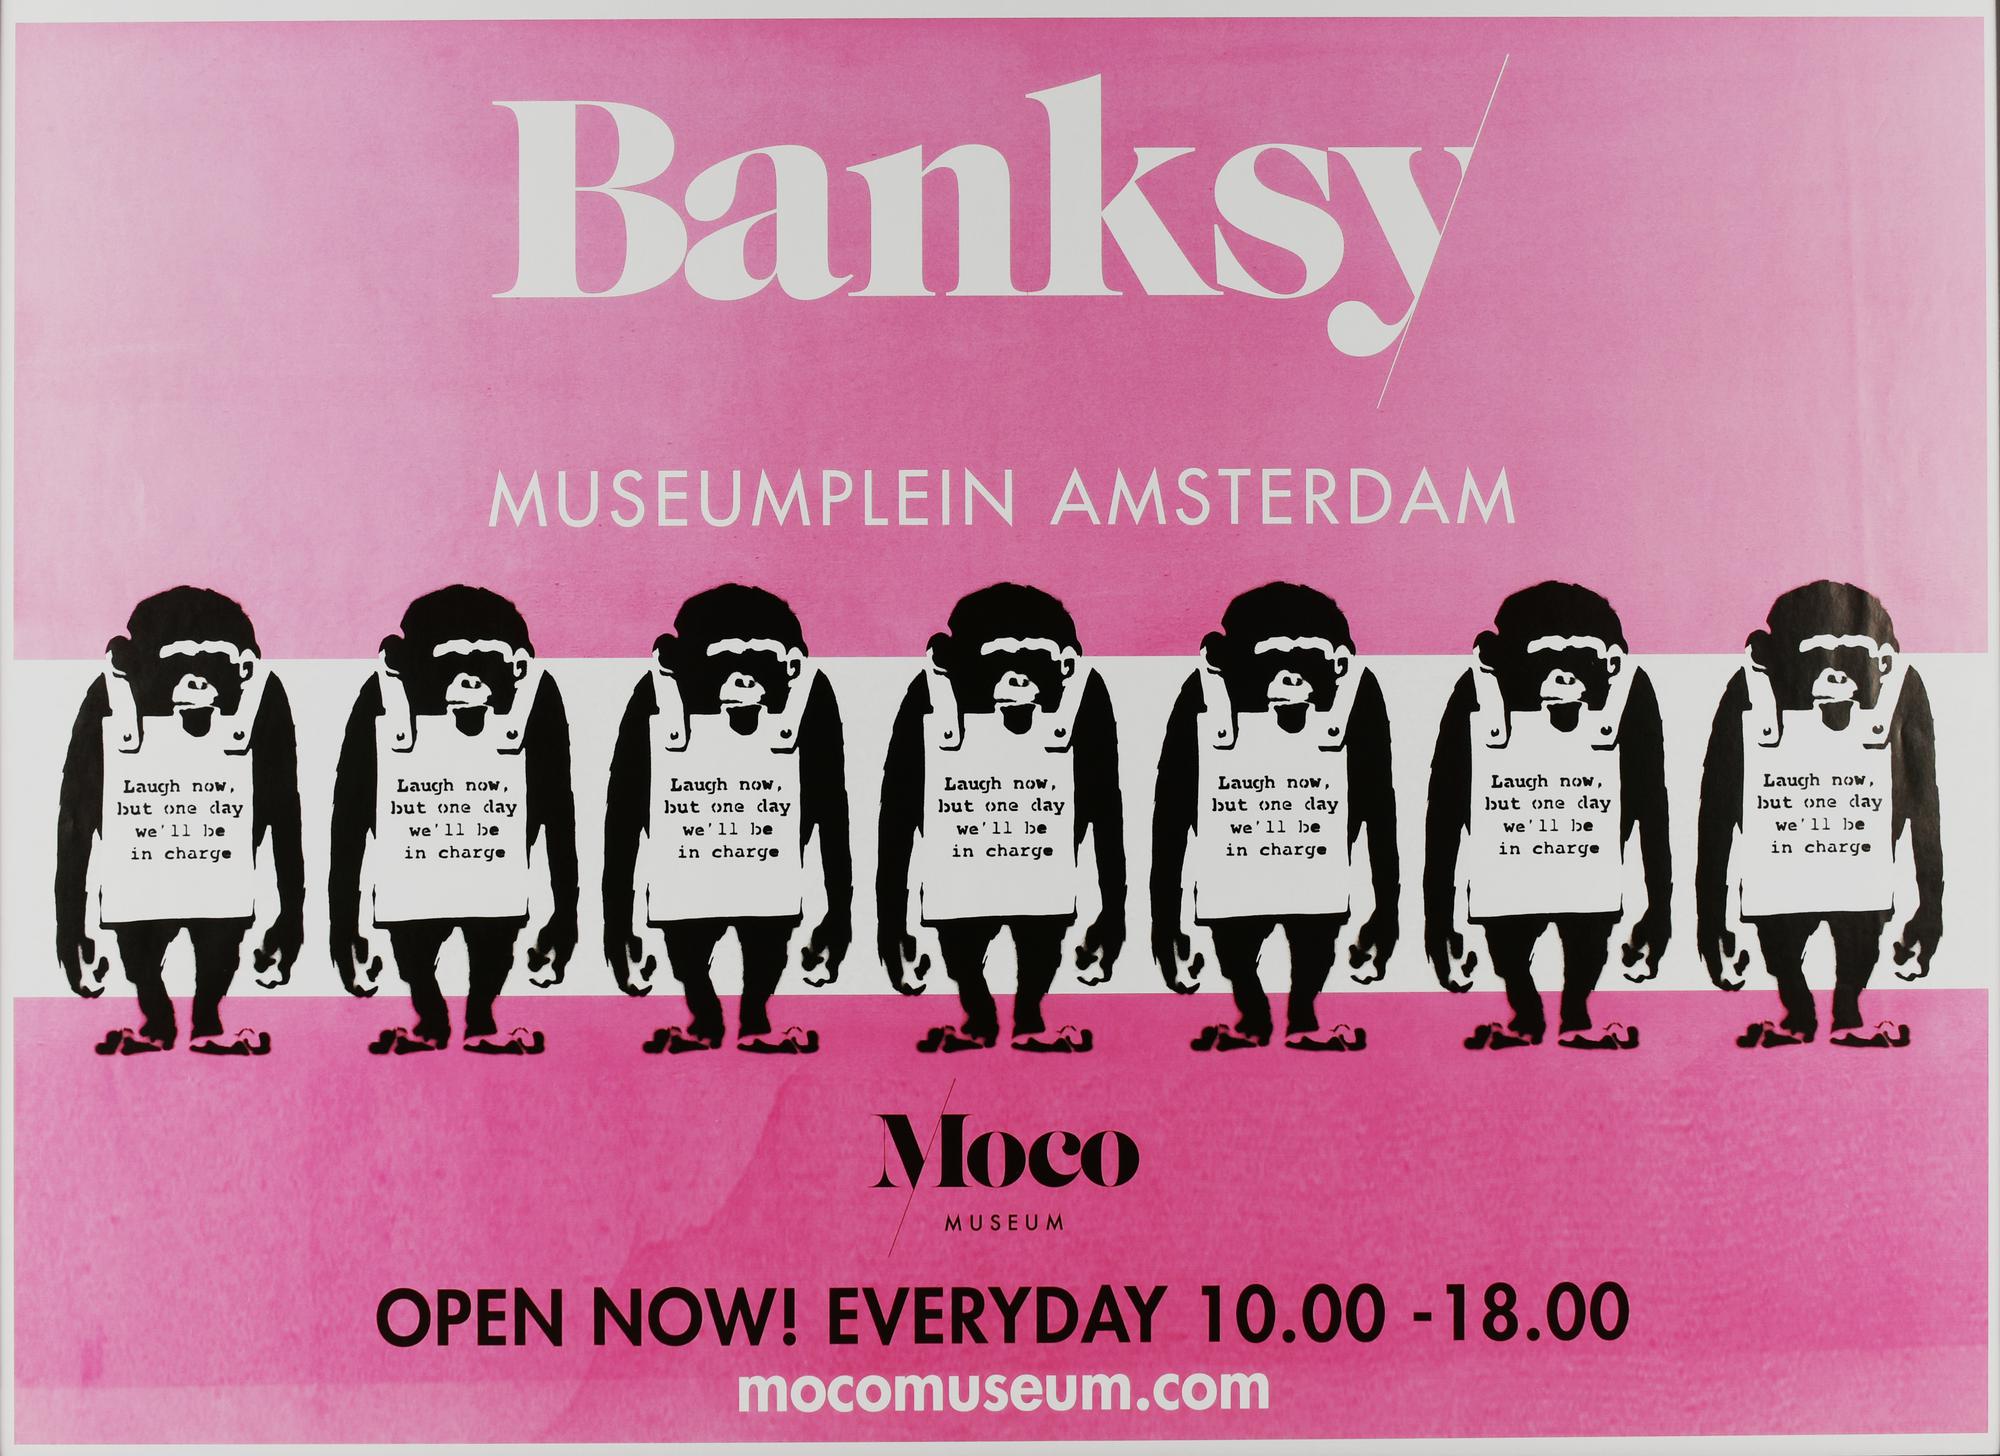 BANKSY MOCO MUSEUM, 2017 stampa tipografica, cm 84x59,5